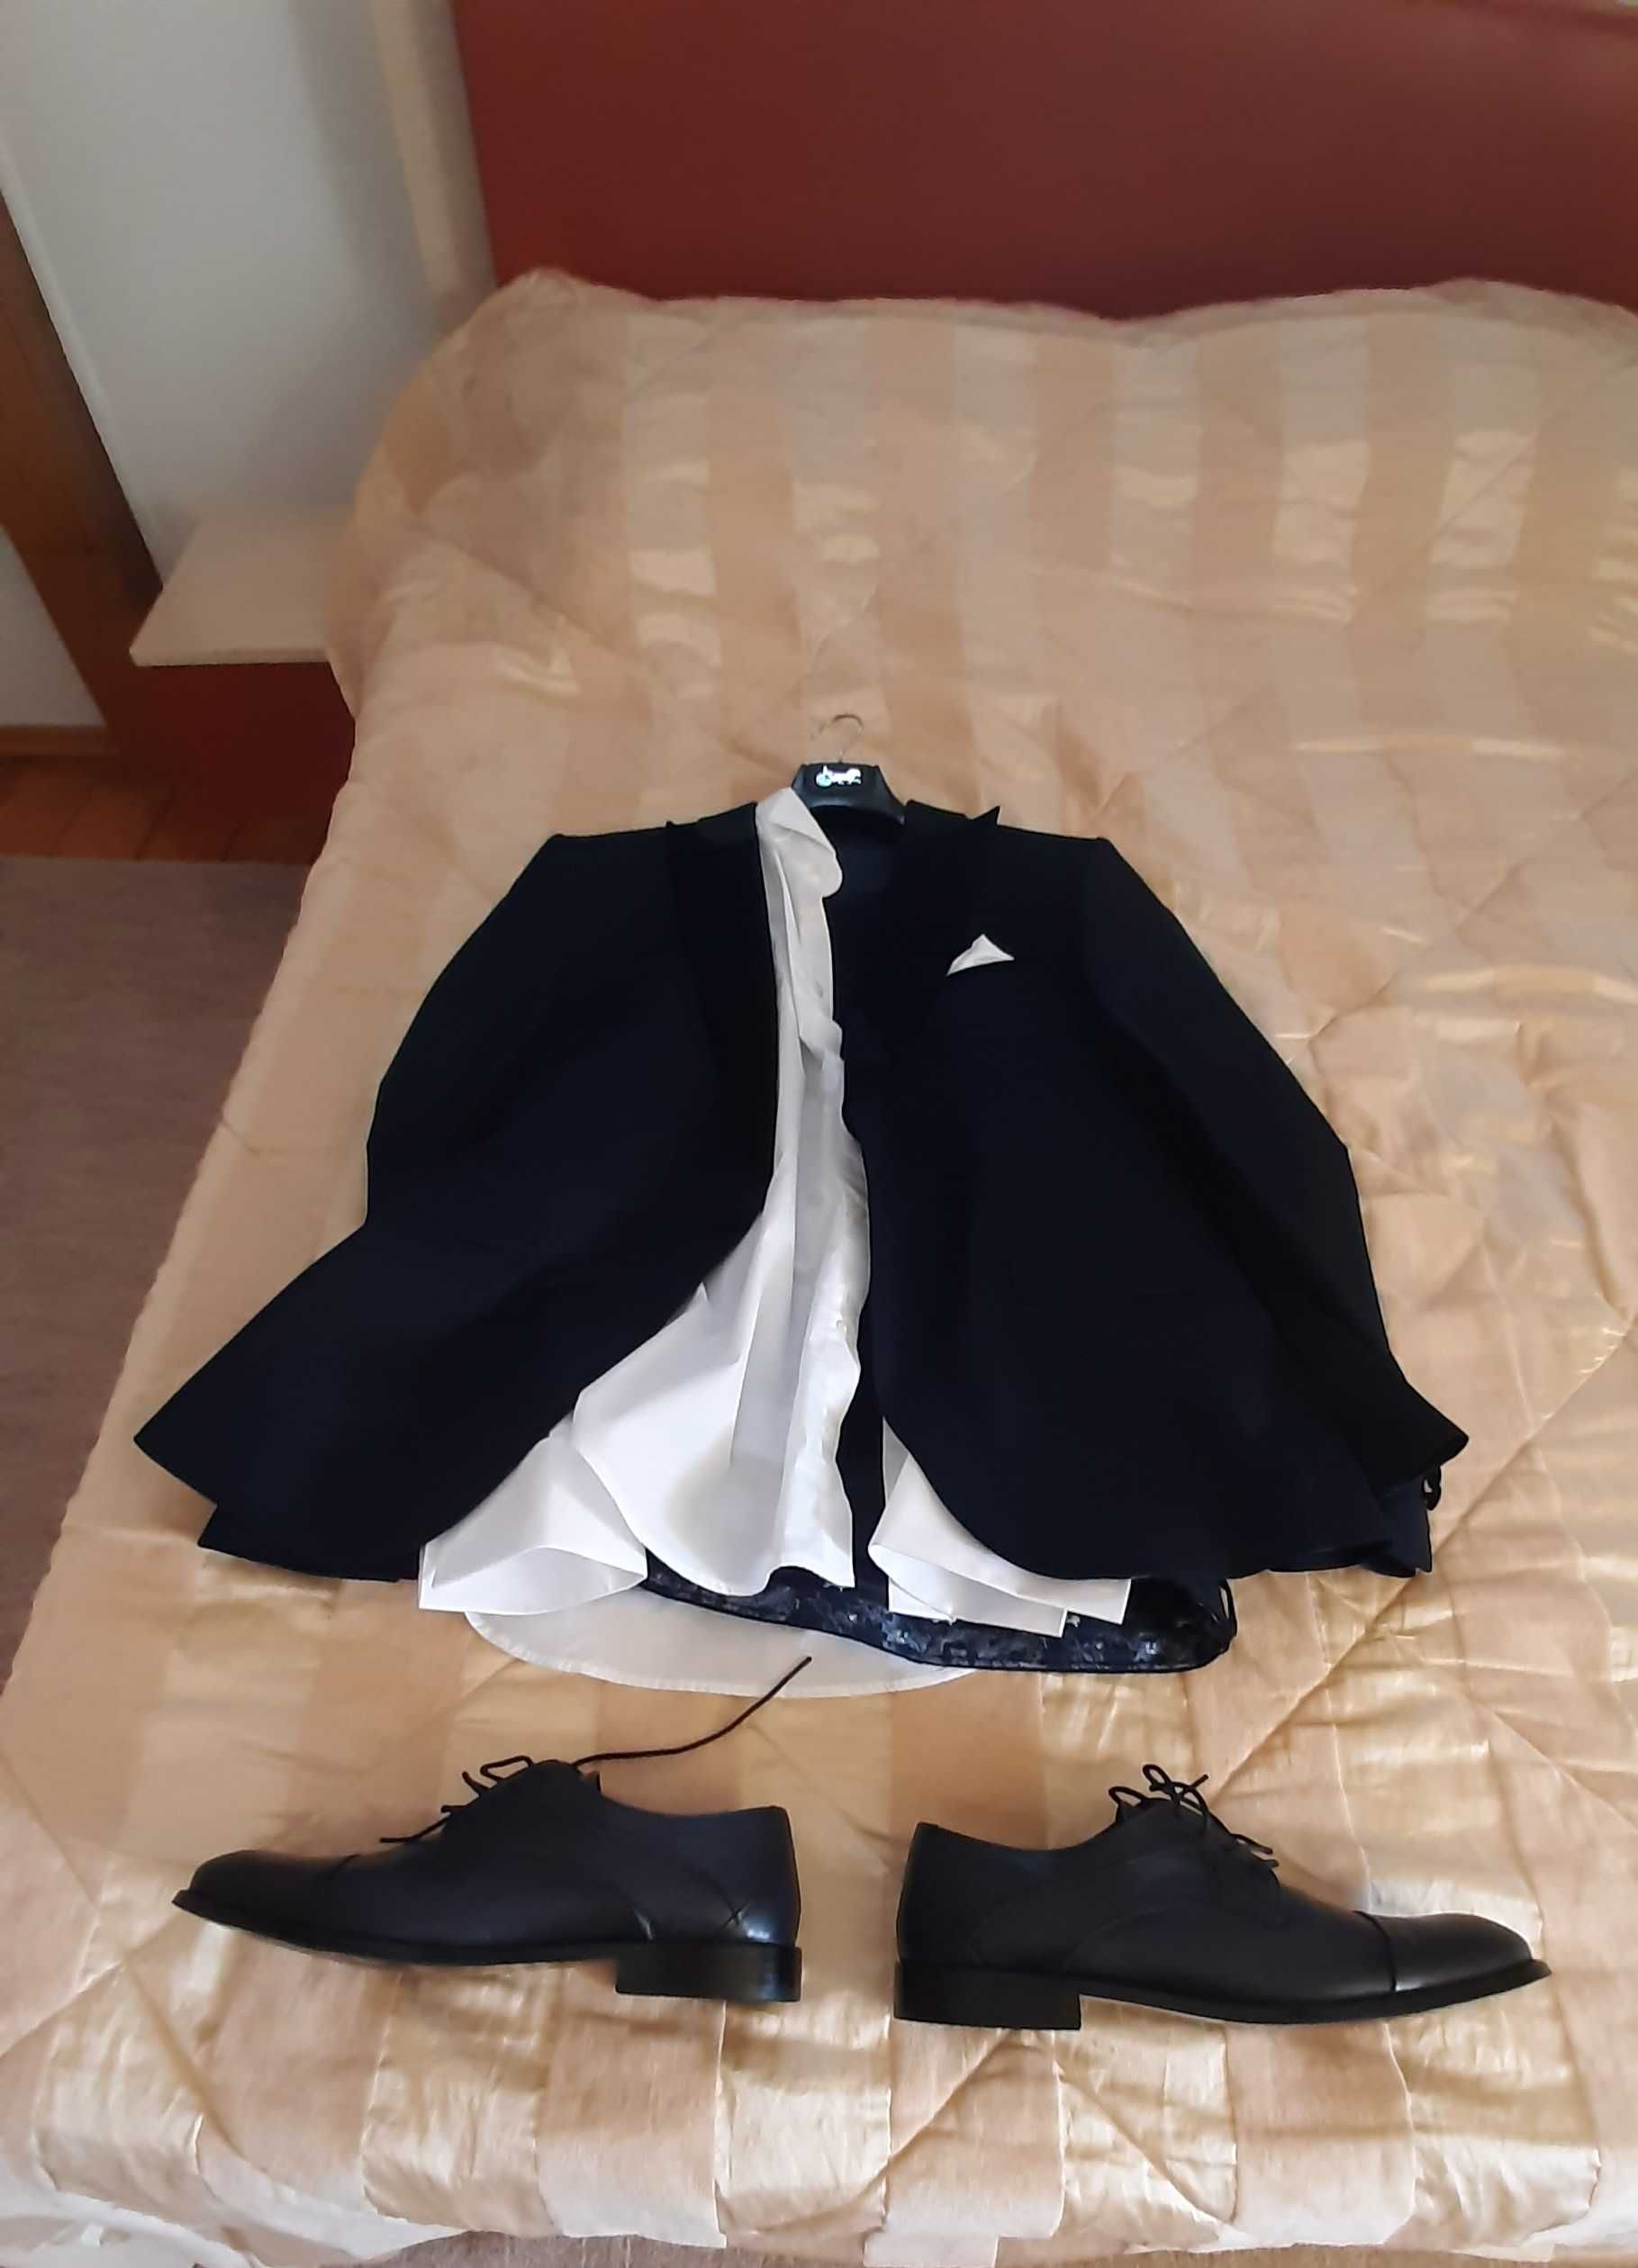 Costum XL complet ( camasa, centura, butoni, papion, pantofi Marelbo)